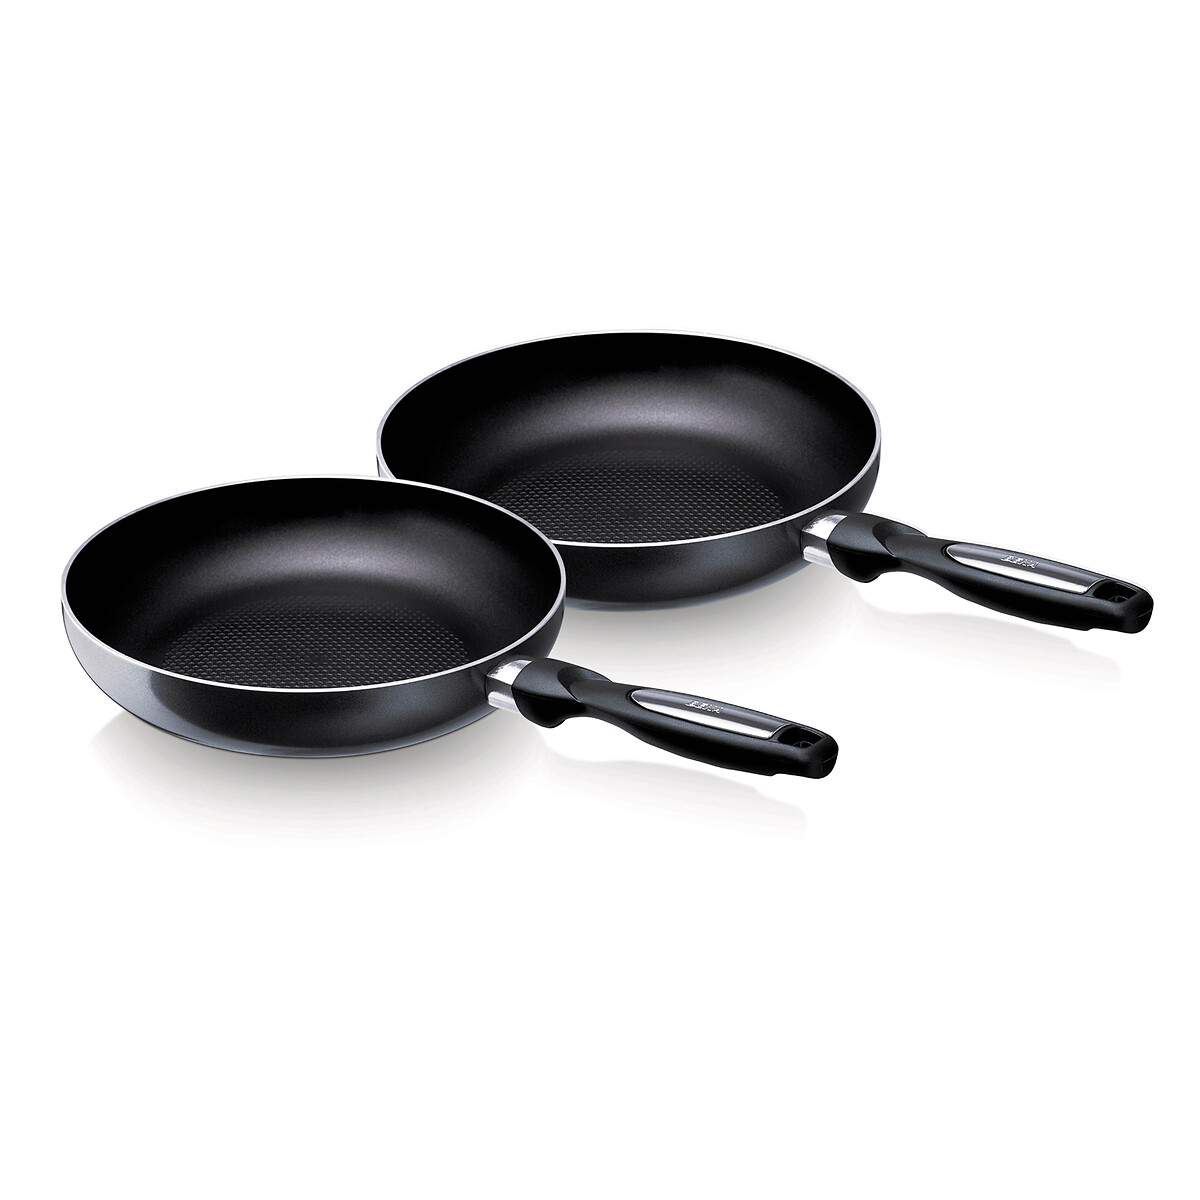 Set of 2 Pro Induc Frying Pans